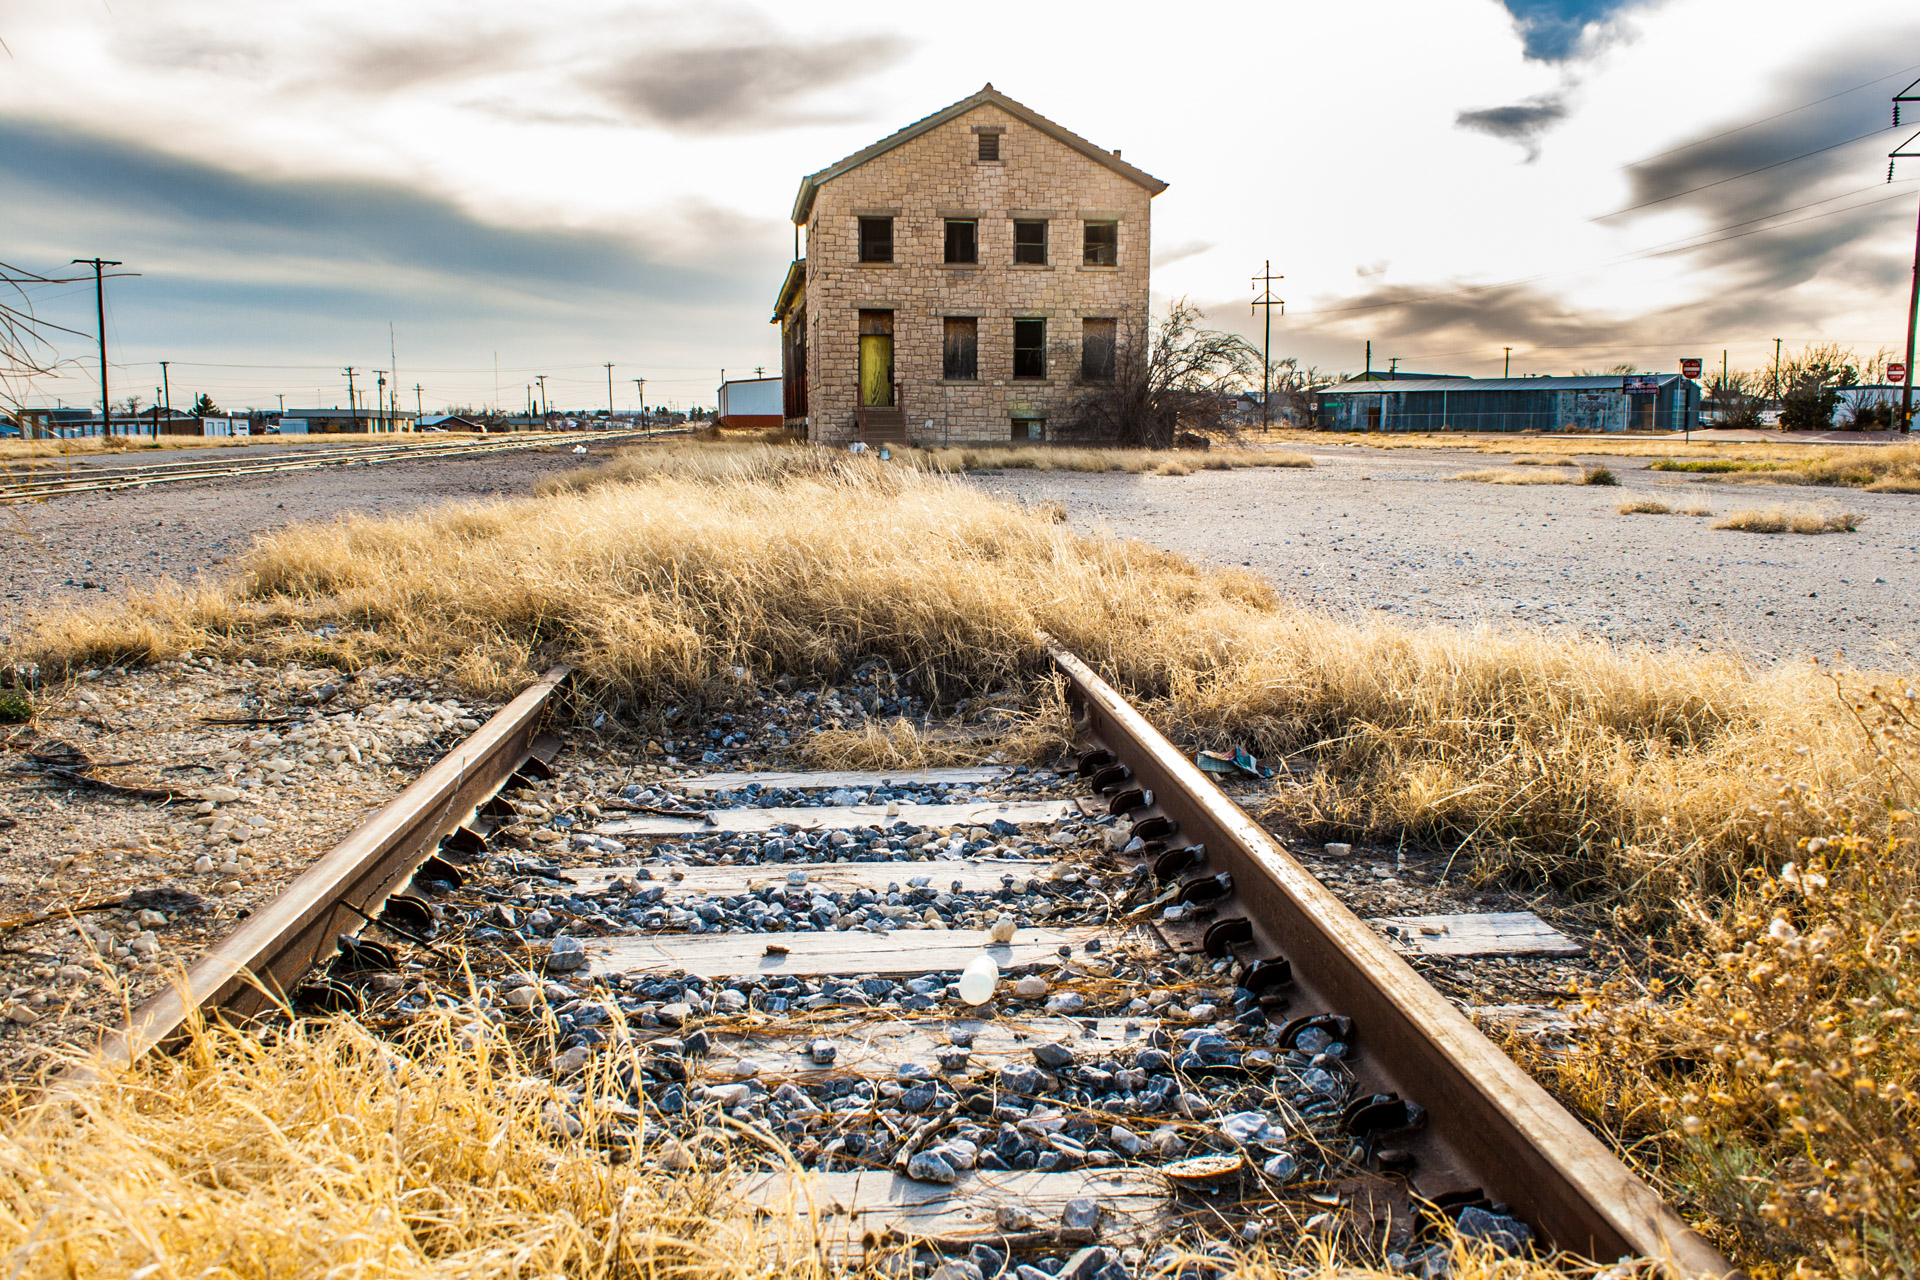 Fort Stockton, Texas - A Colorful Train Depot (tracks)